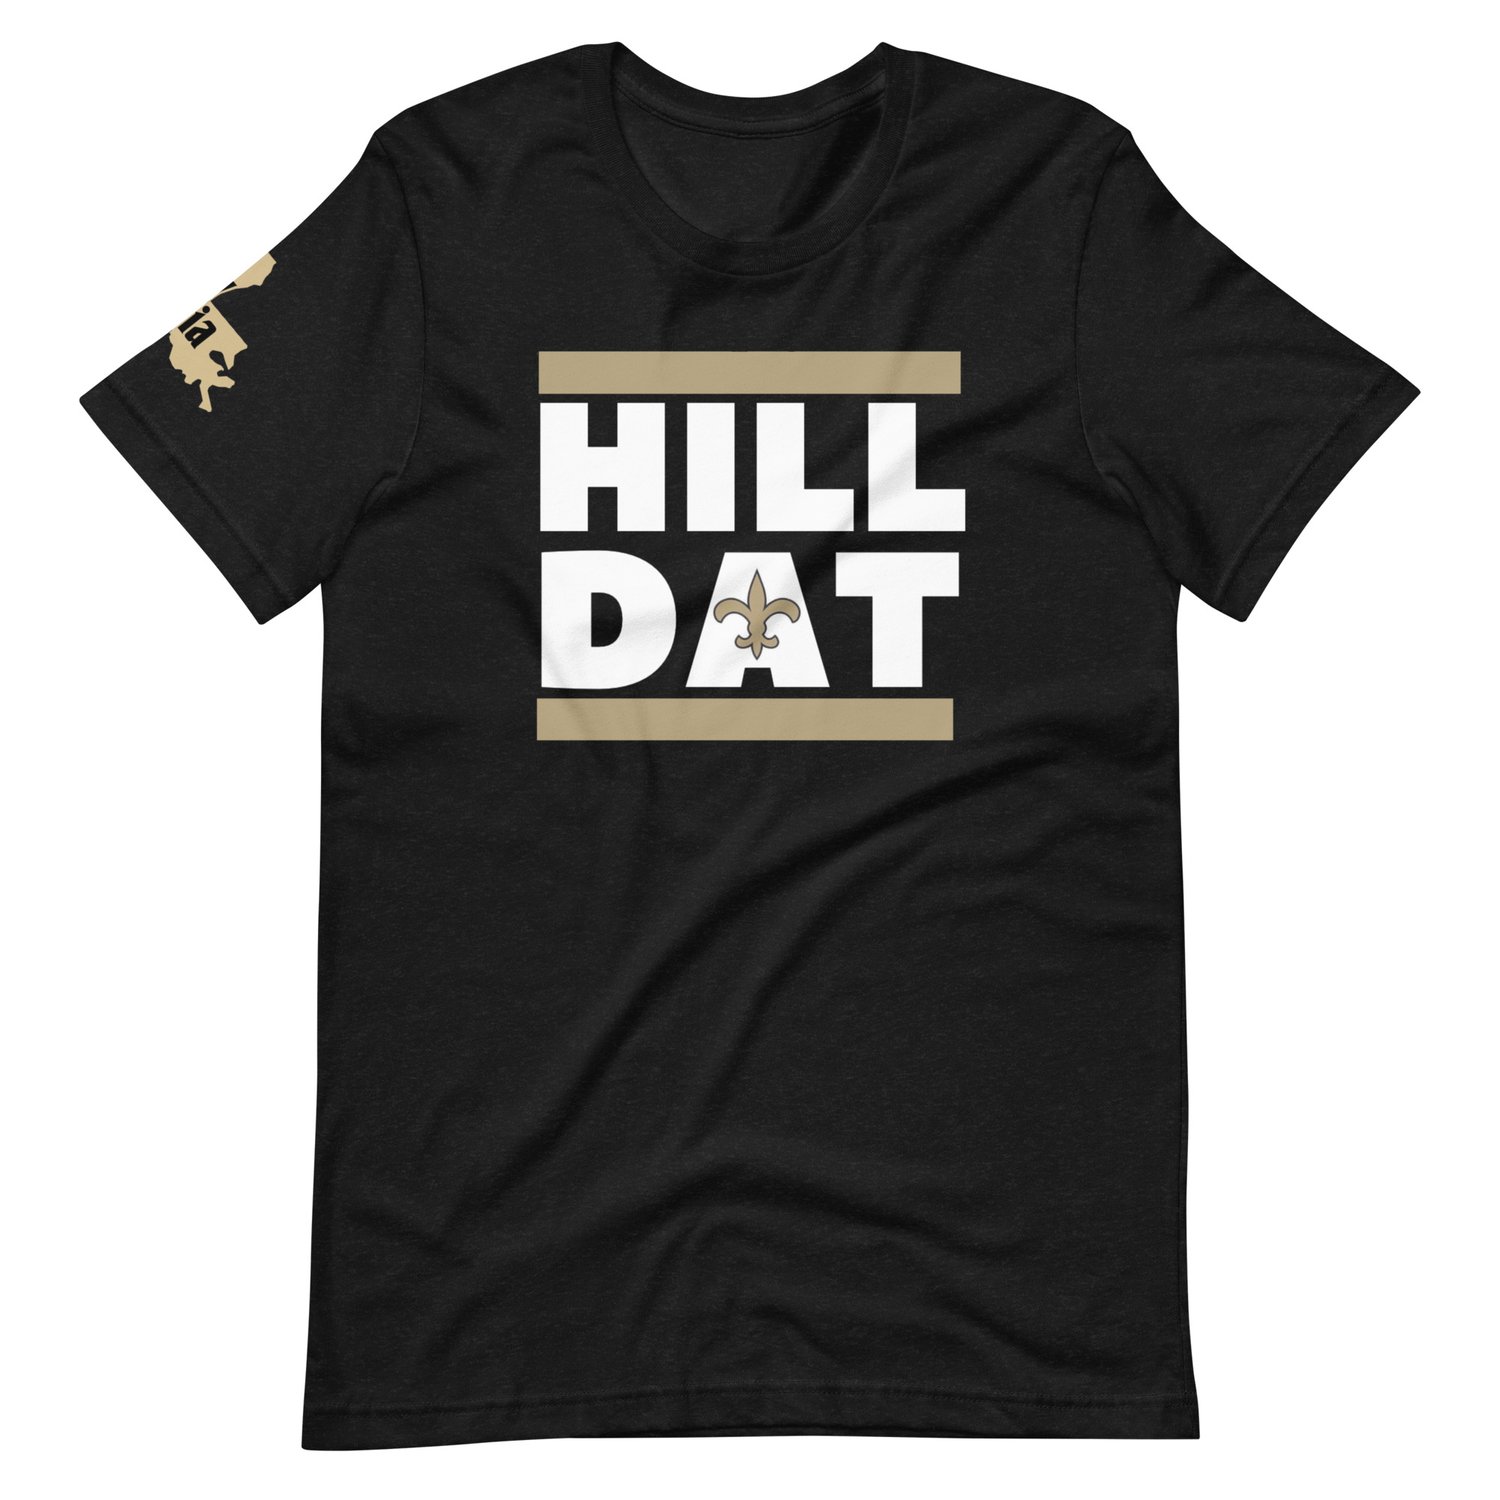 Image of “HILL DAT” Unisex t-shirt